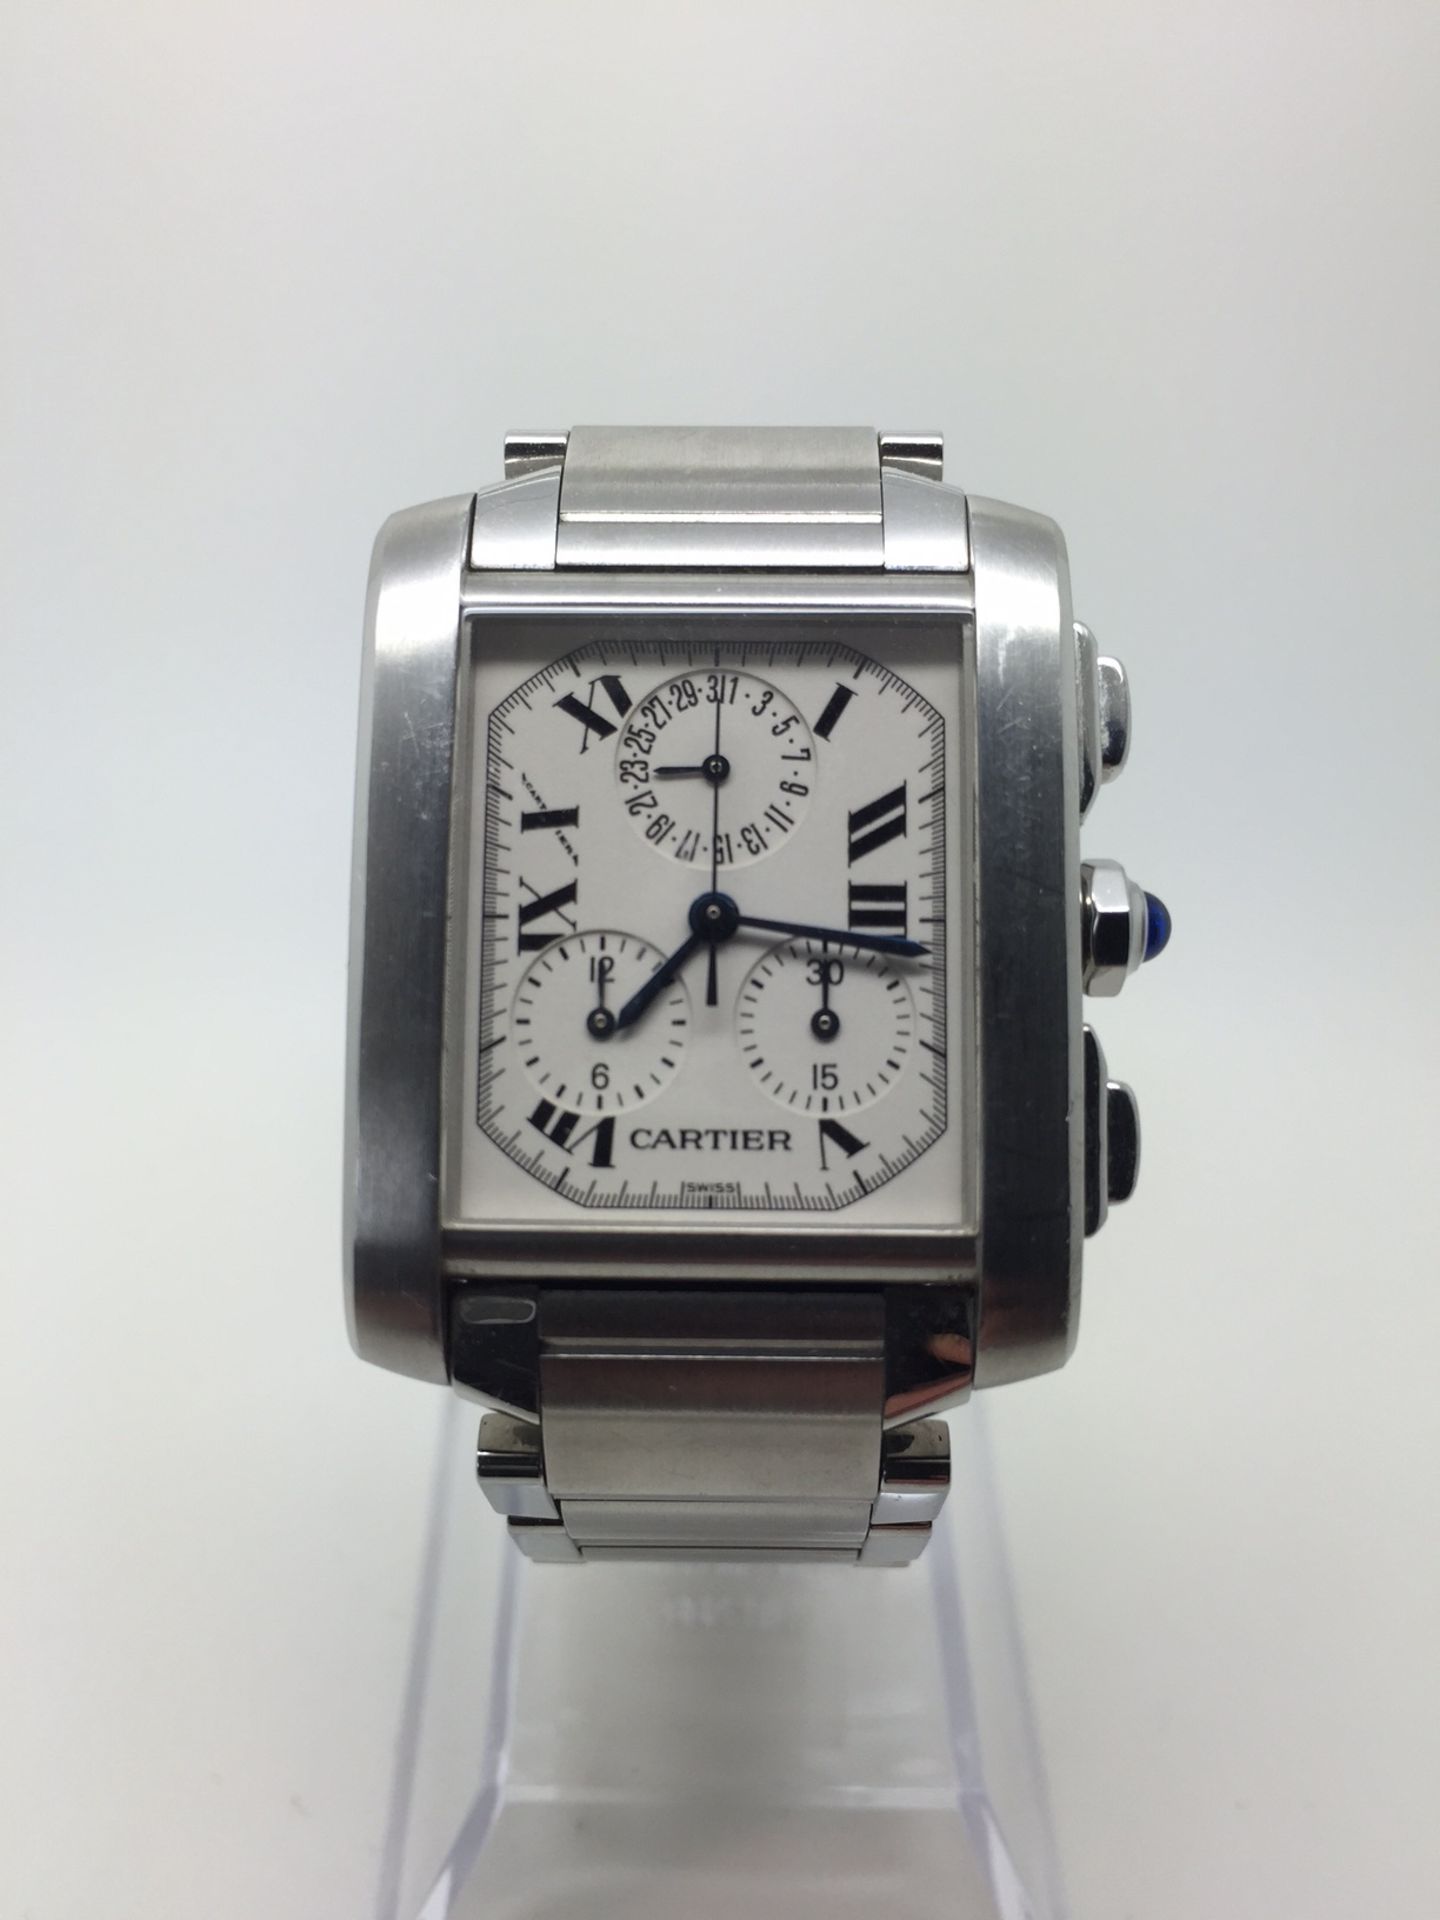 Cartier - Tank Francaise Chronoflex bracelet watch. Stainless steel case.